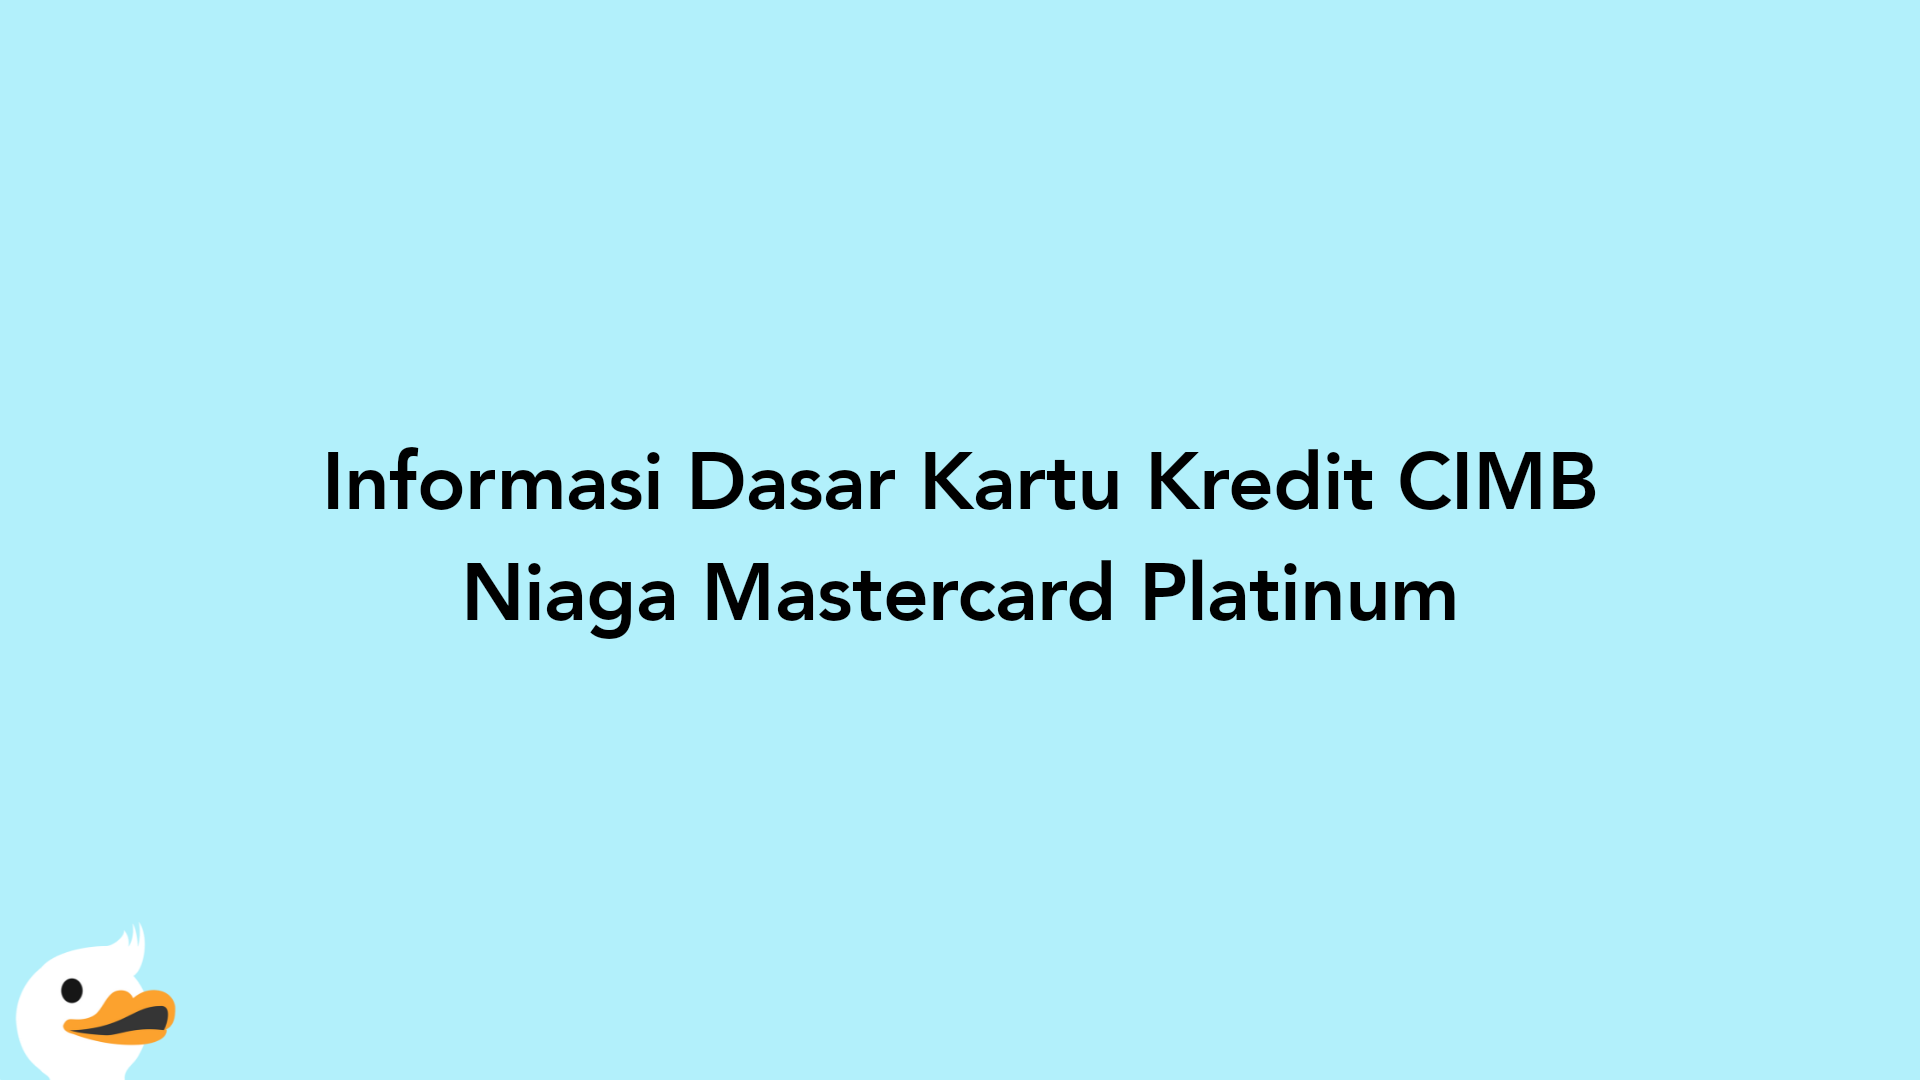 Informasi Dasar Kartu Kredit CIMB Niaga Mastercard Platinum